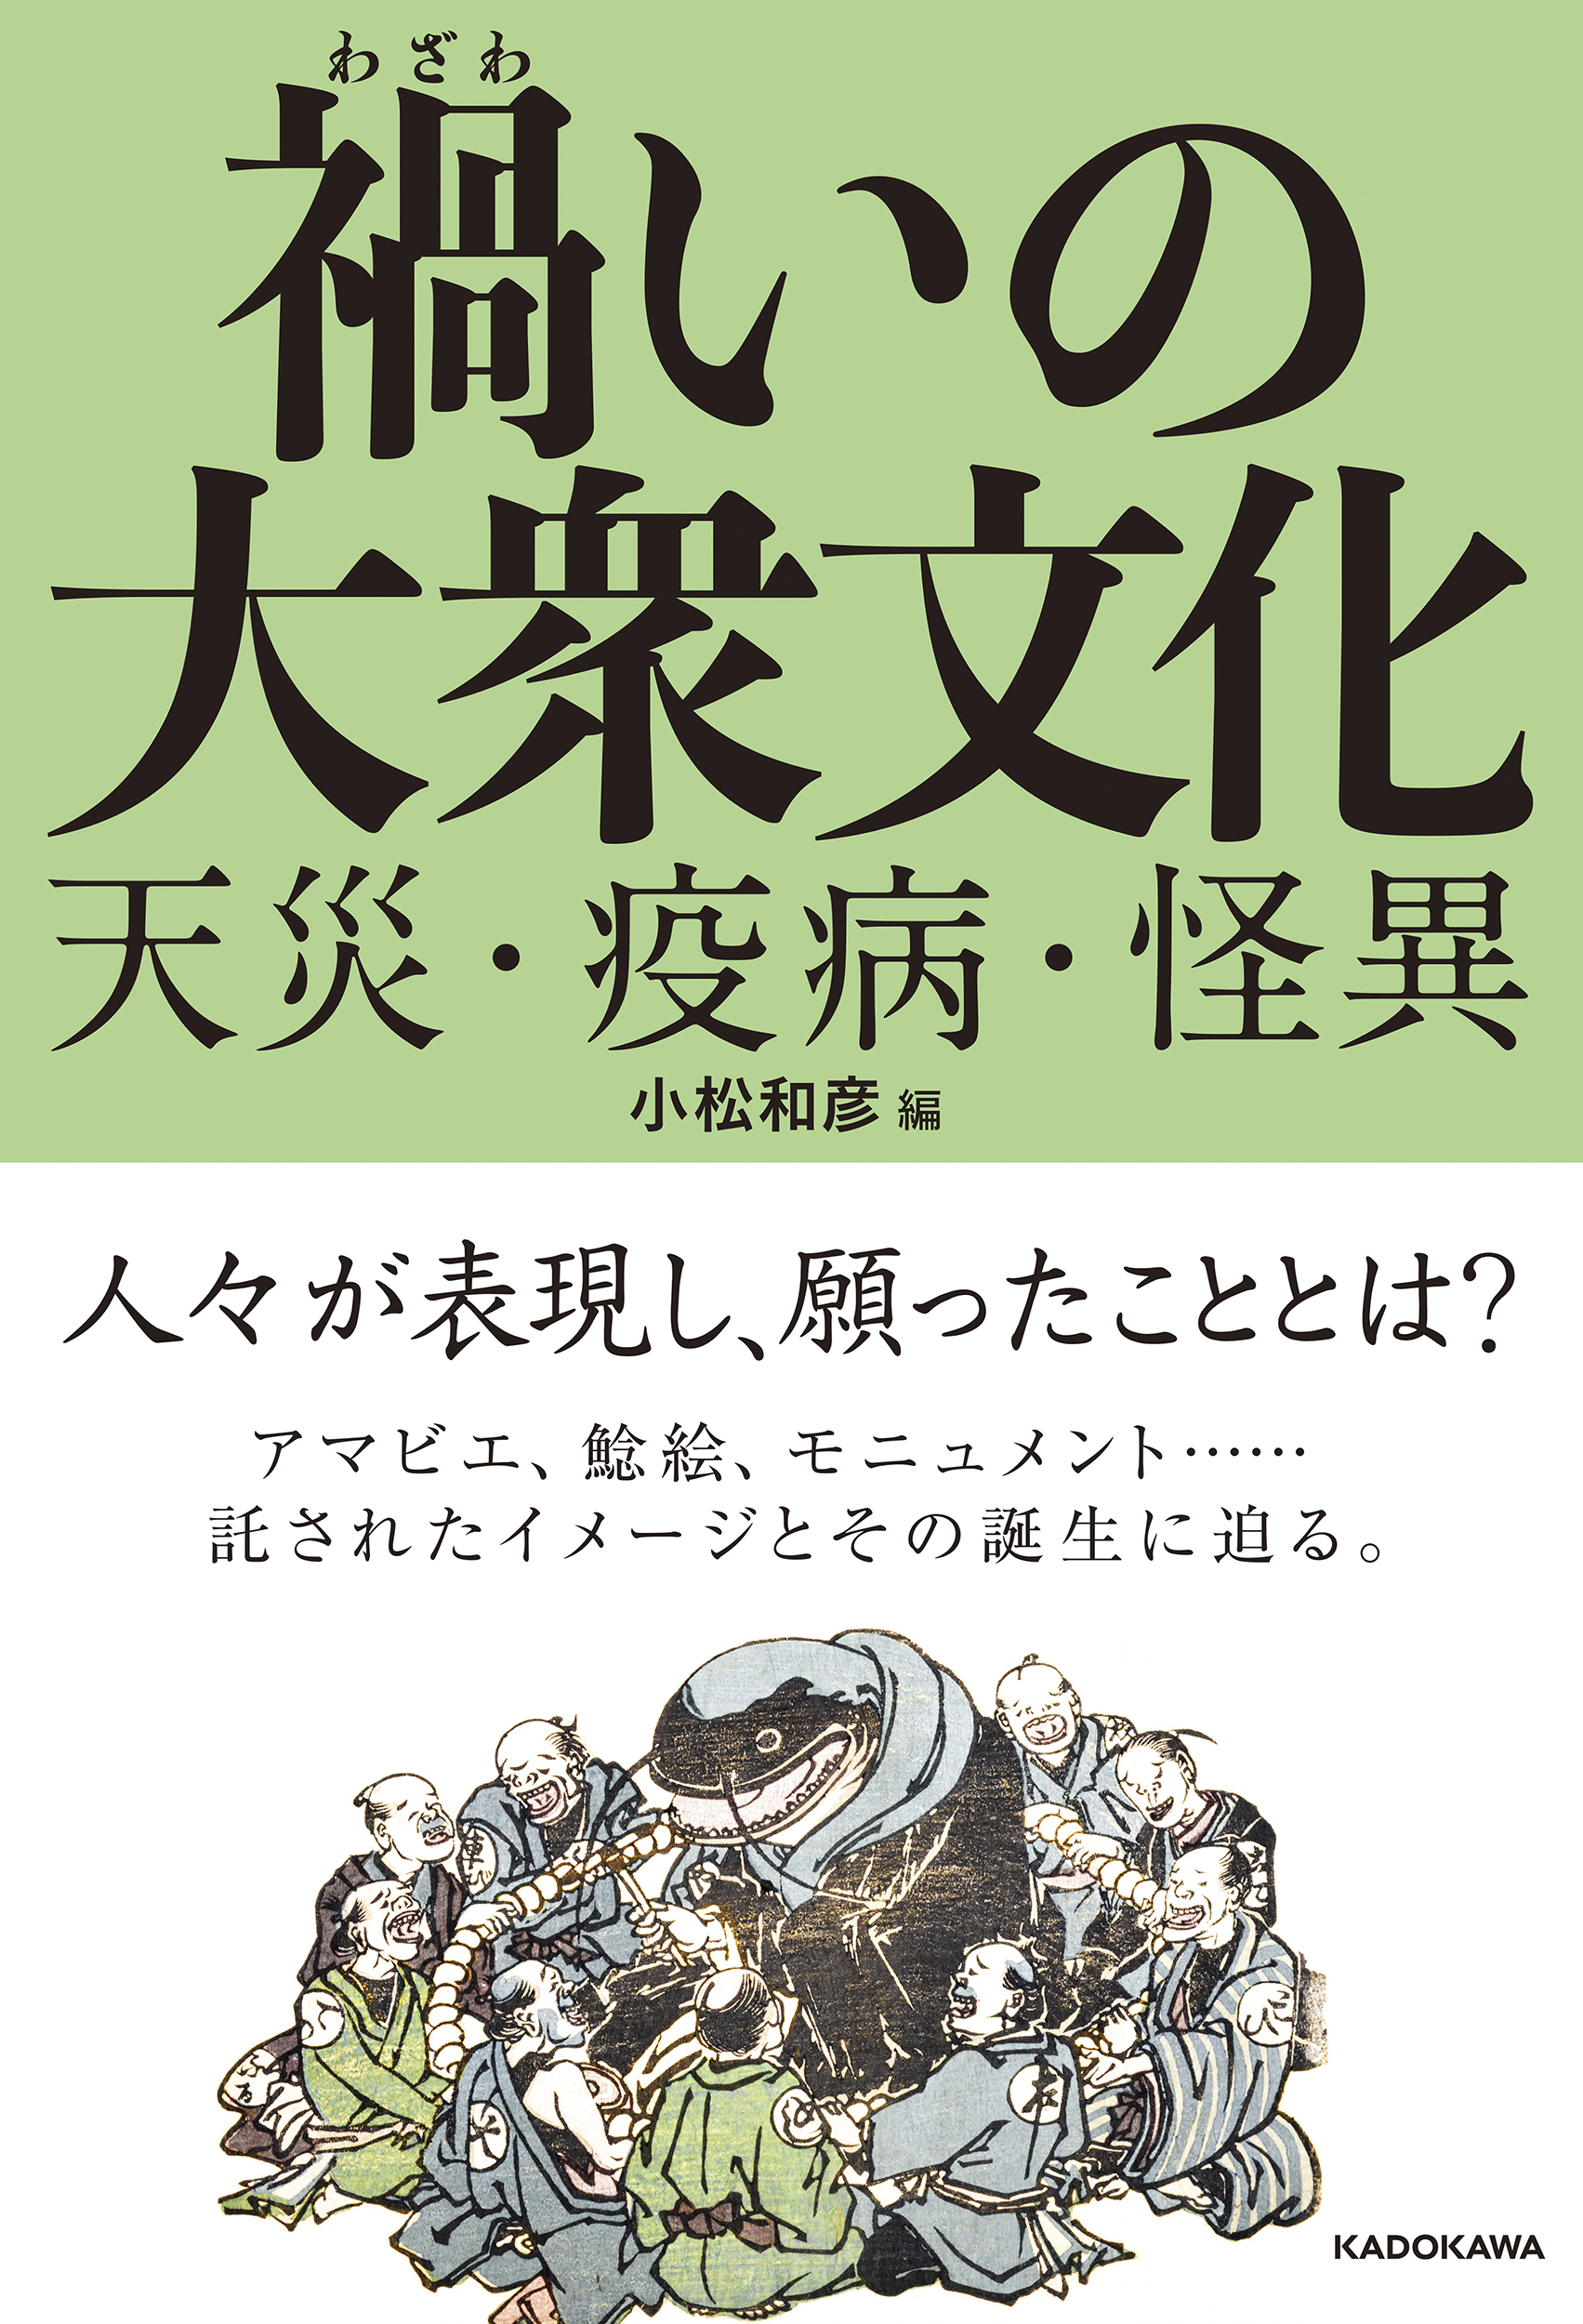 Wazawai no taishū bunka: Tensai ekibyō kaii <span>(The Popular Culture of Catastrophes: Natural Disasters, Pandemics and Strange Happenings)</span>